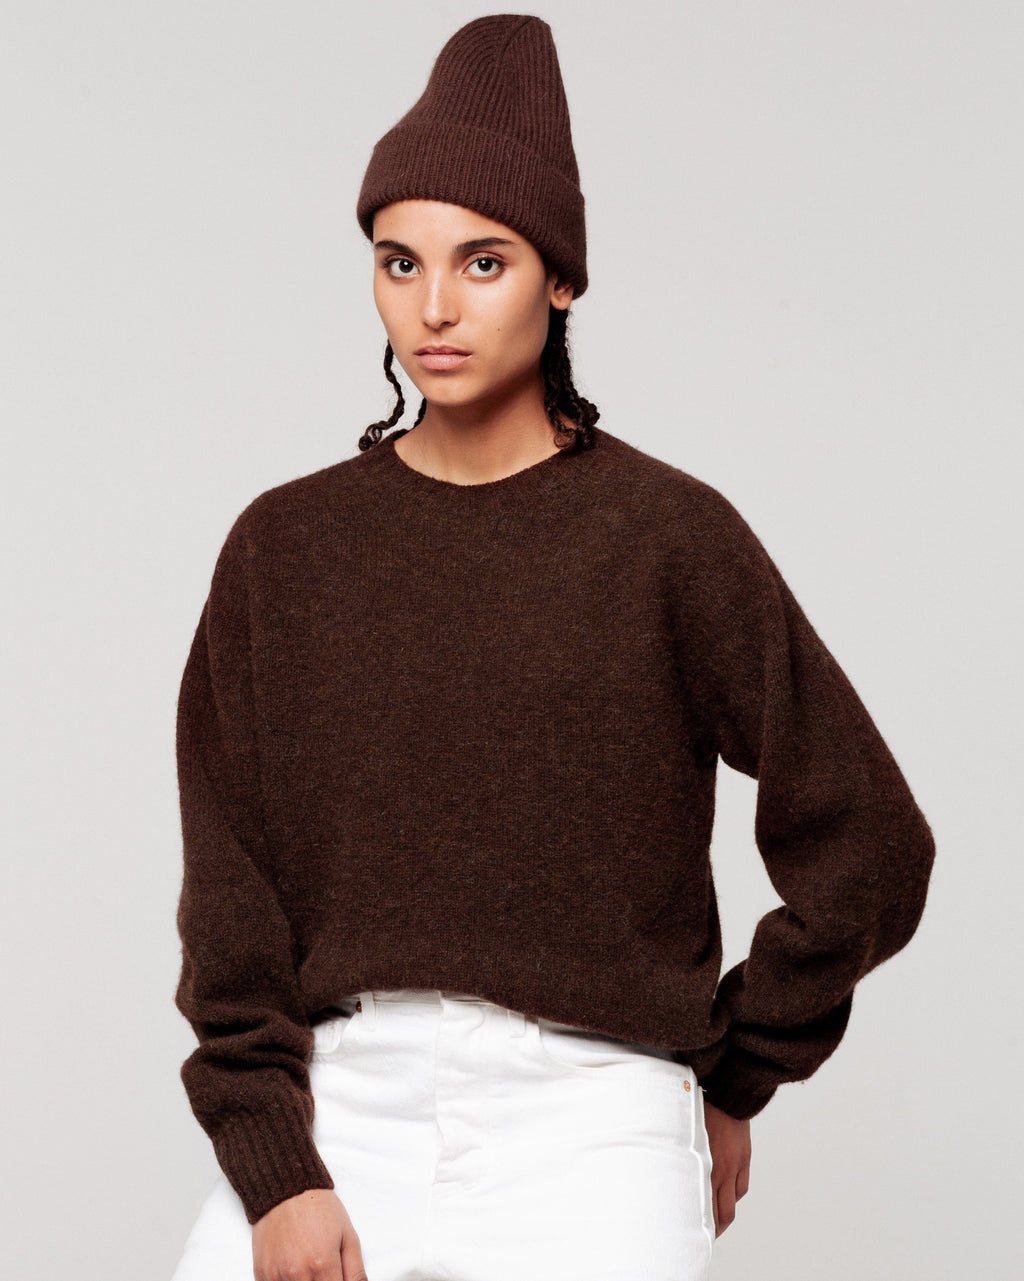 Tenue. Tenue. x Le Bonnet Kennedy Chocolate Sweater